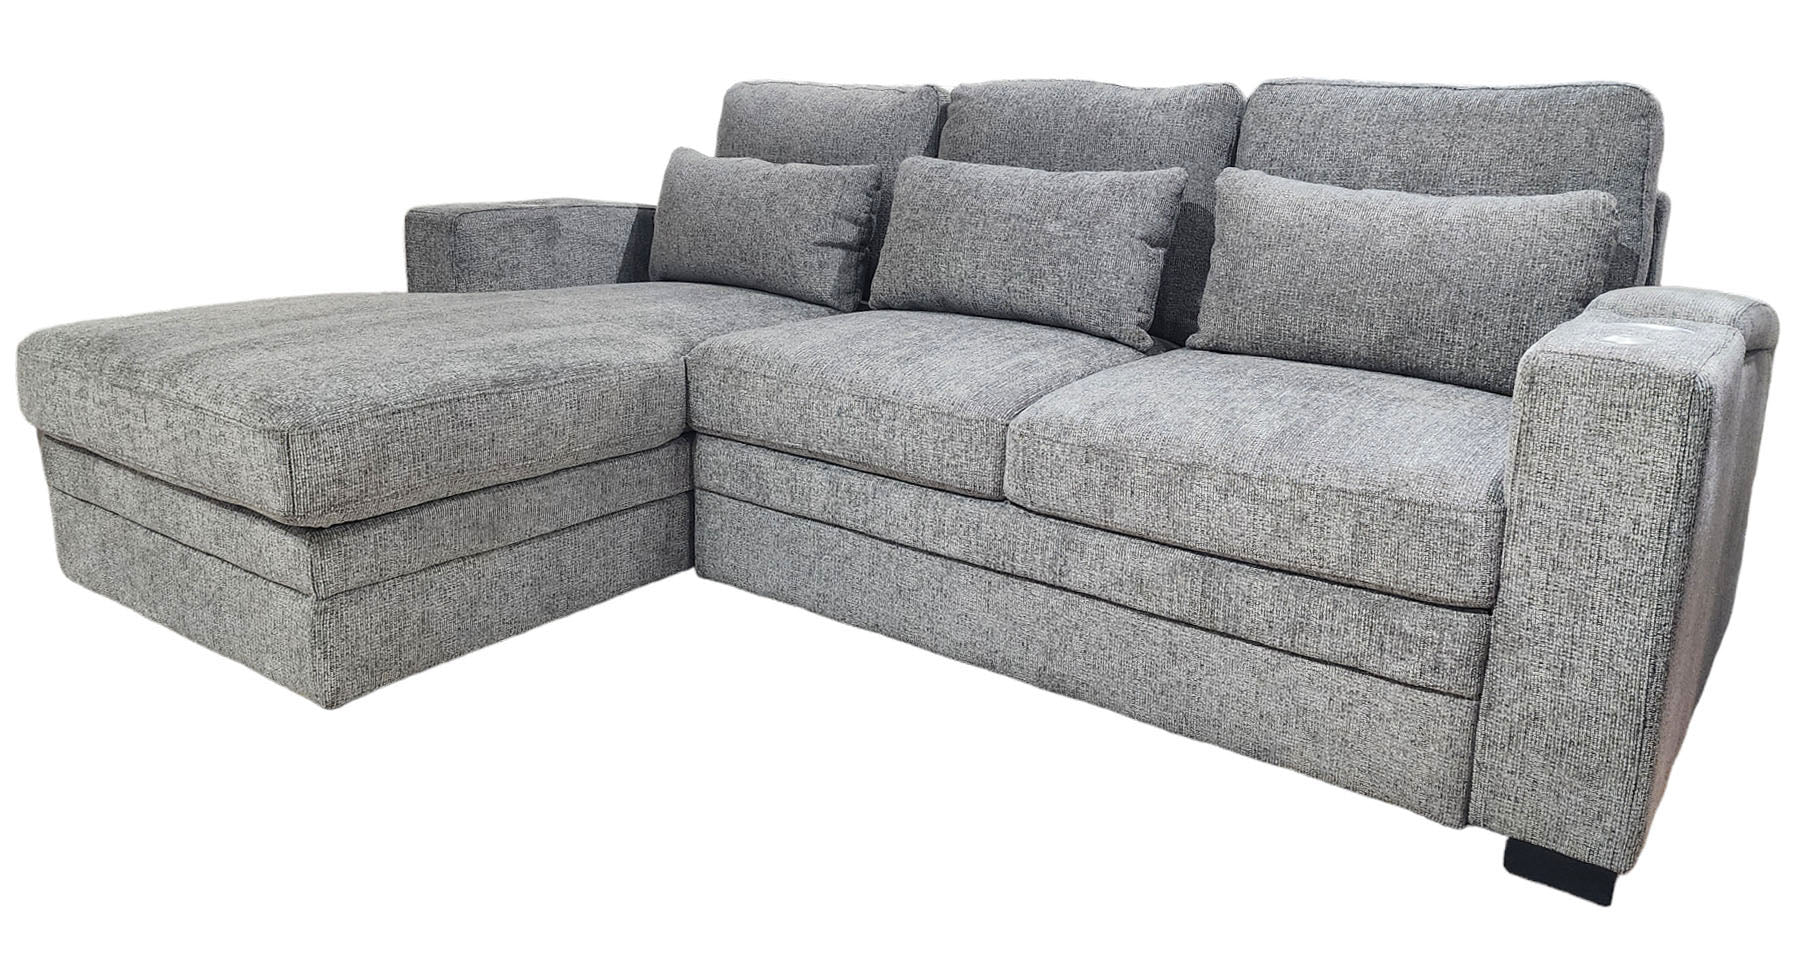 Oz Gray 2 Piece Sleeper Sectional - MJM Furniture